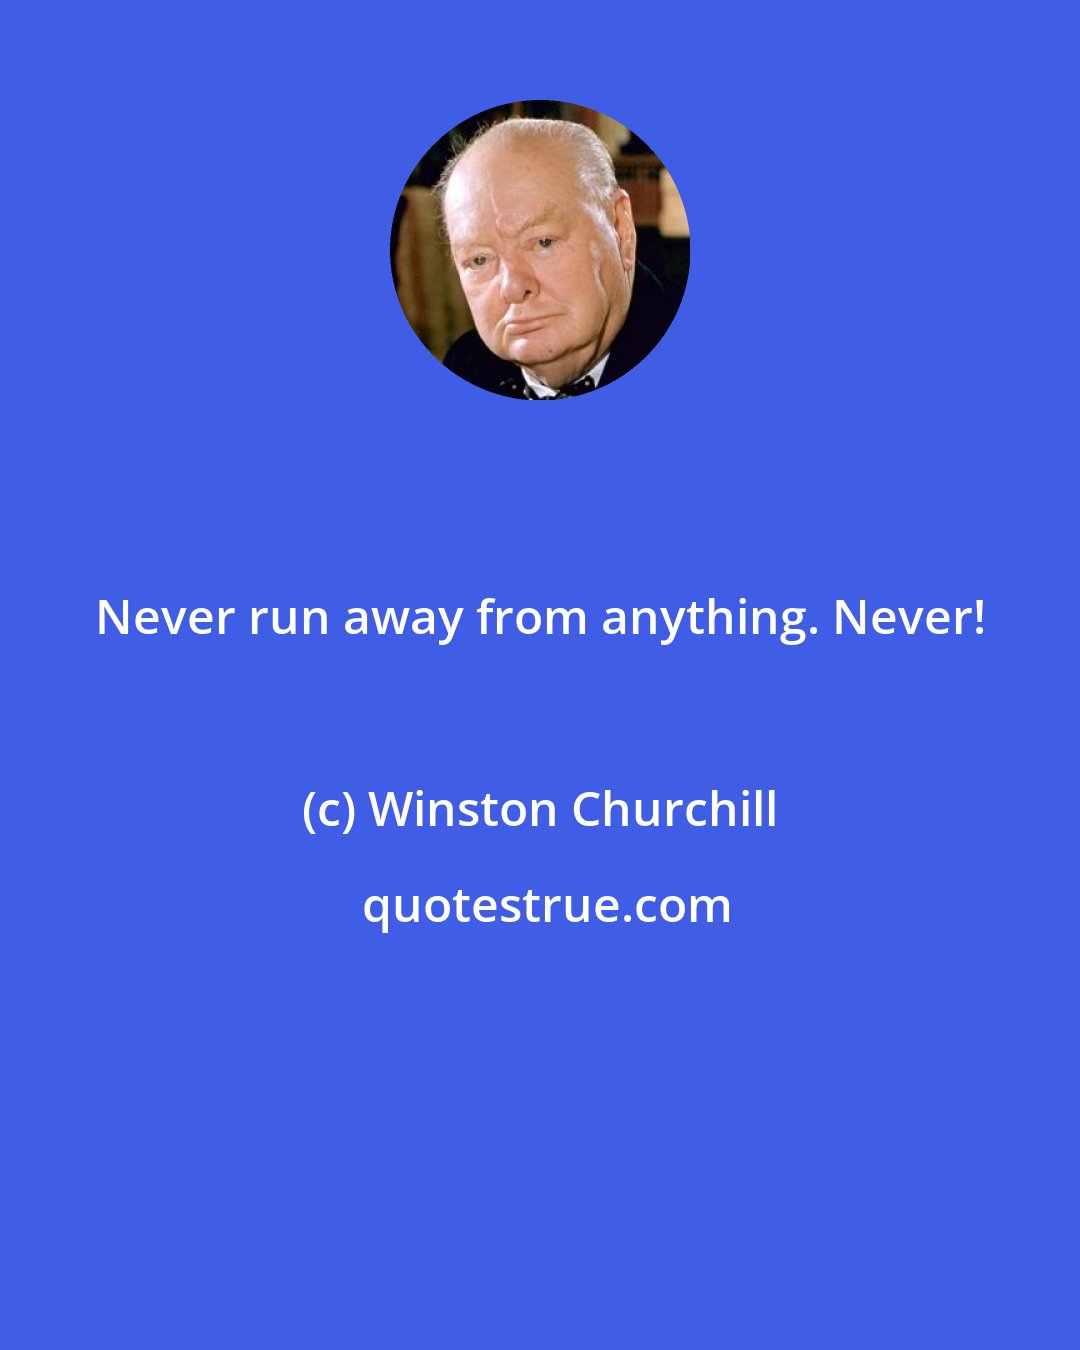 Winston Churchill: Never run away from anything. Never!